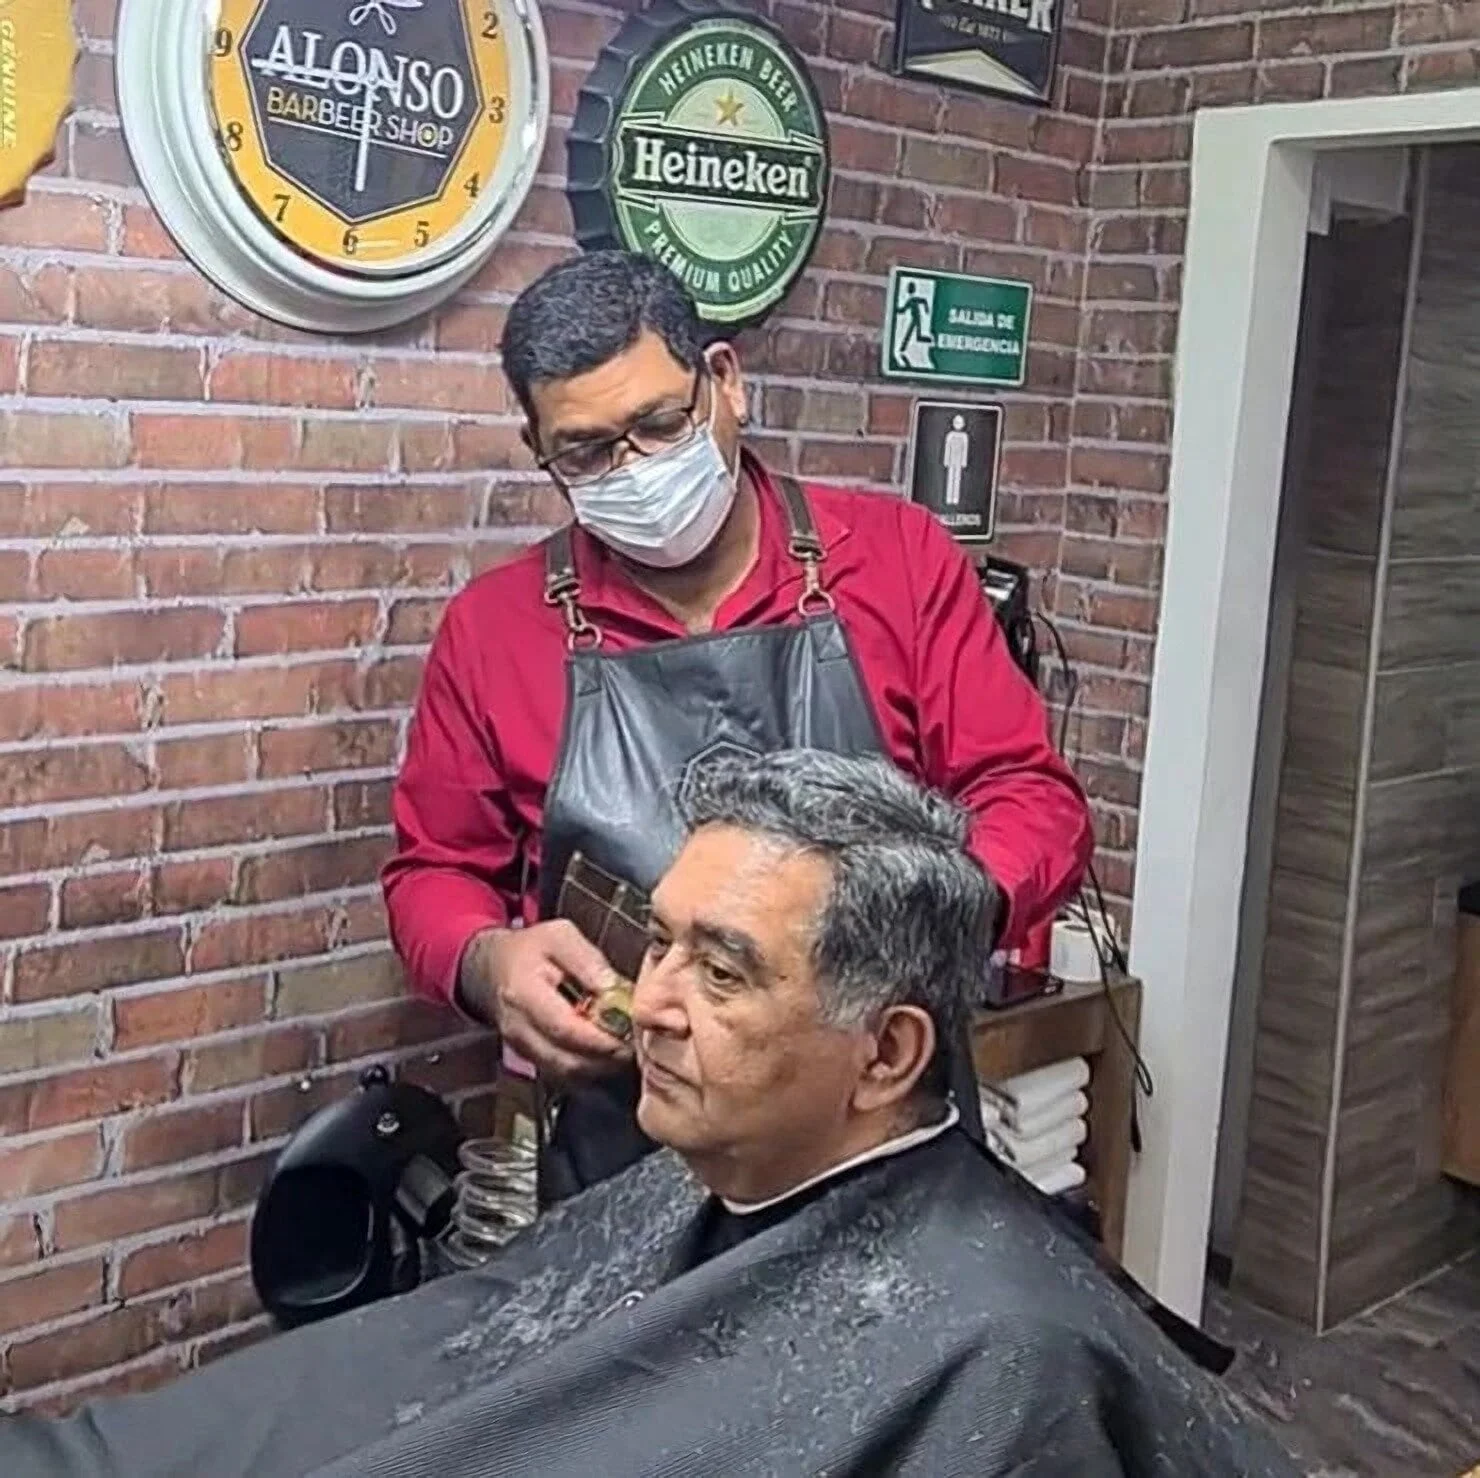 Barbería-alonso-barber-shop-12056